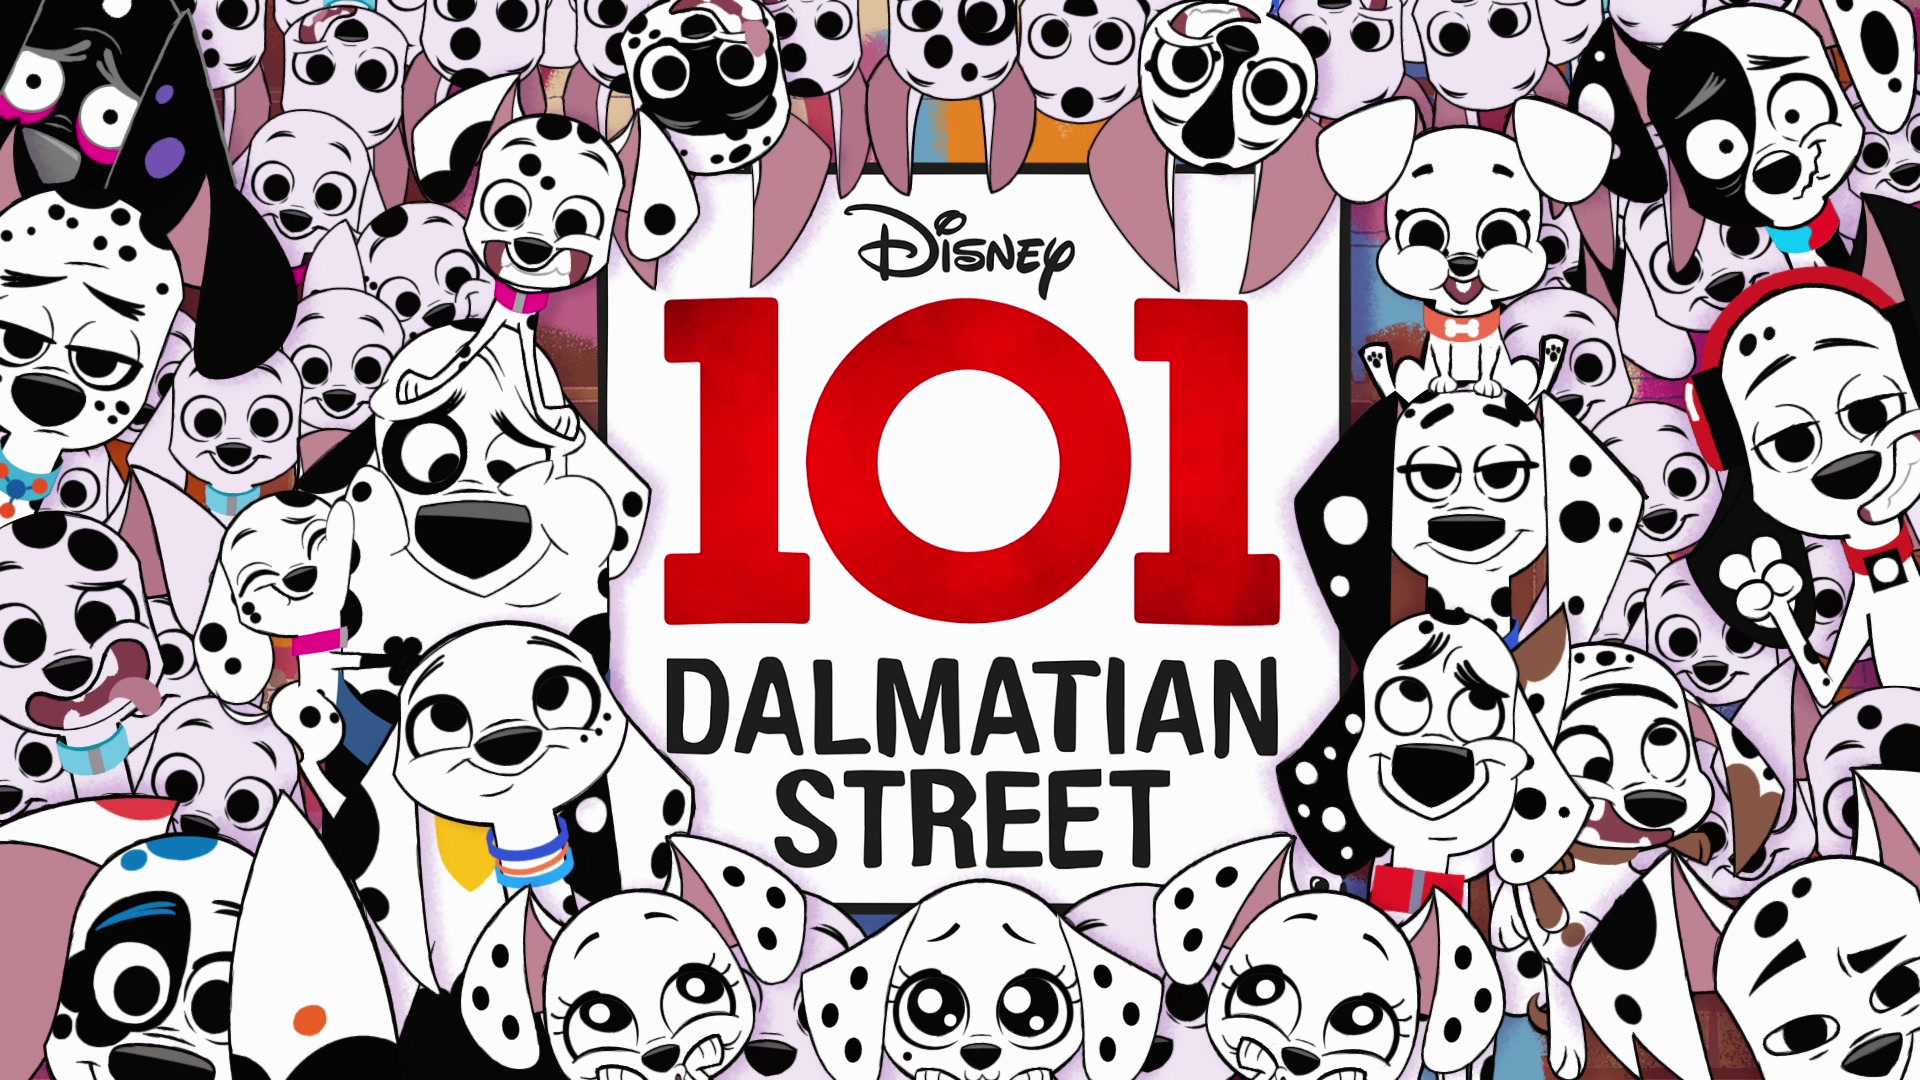 Dalmatian Street Season 1 Image